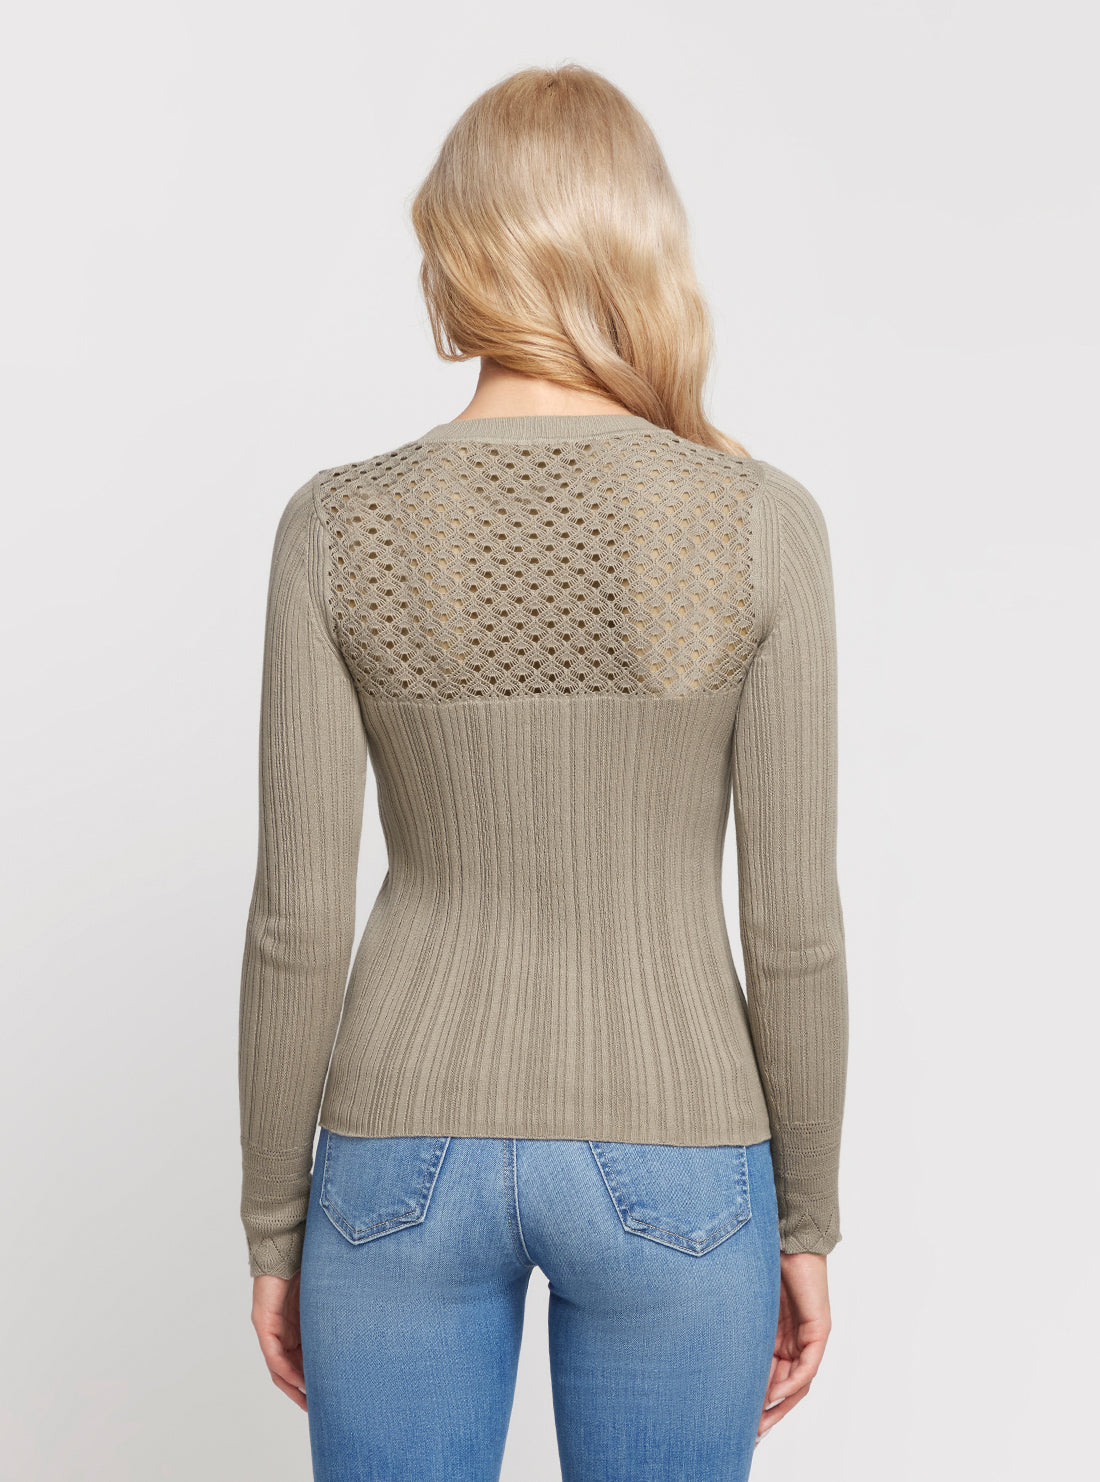 GUESS Light Khaki Marie Long Sleeve Sweater Top back view